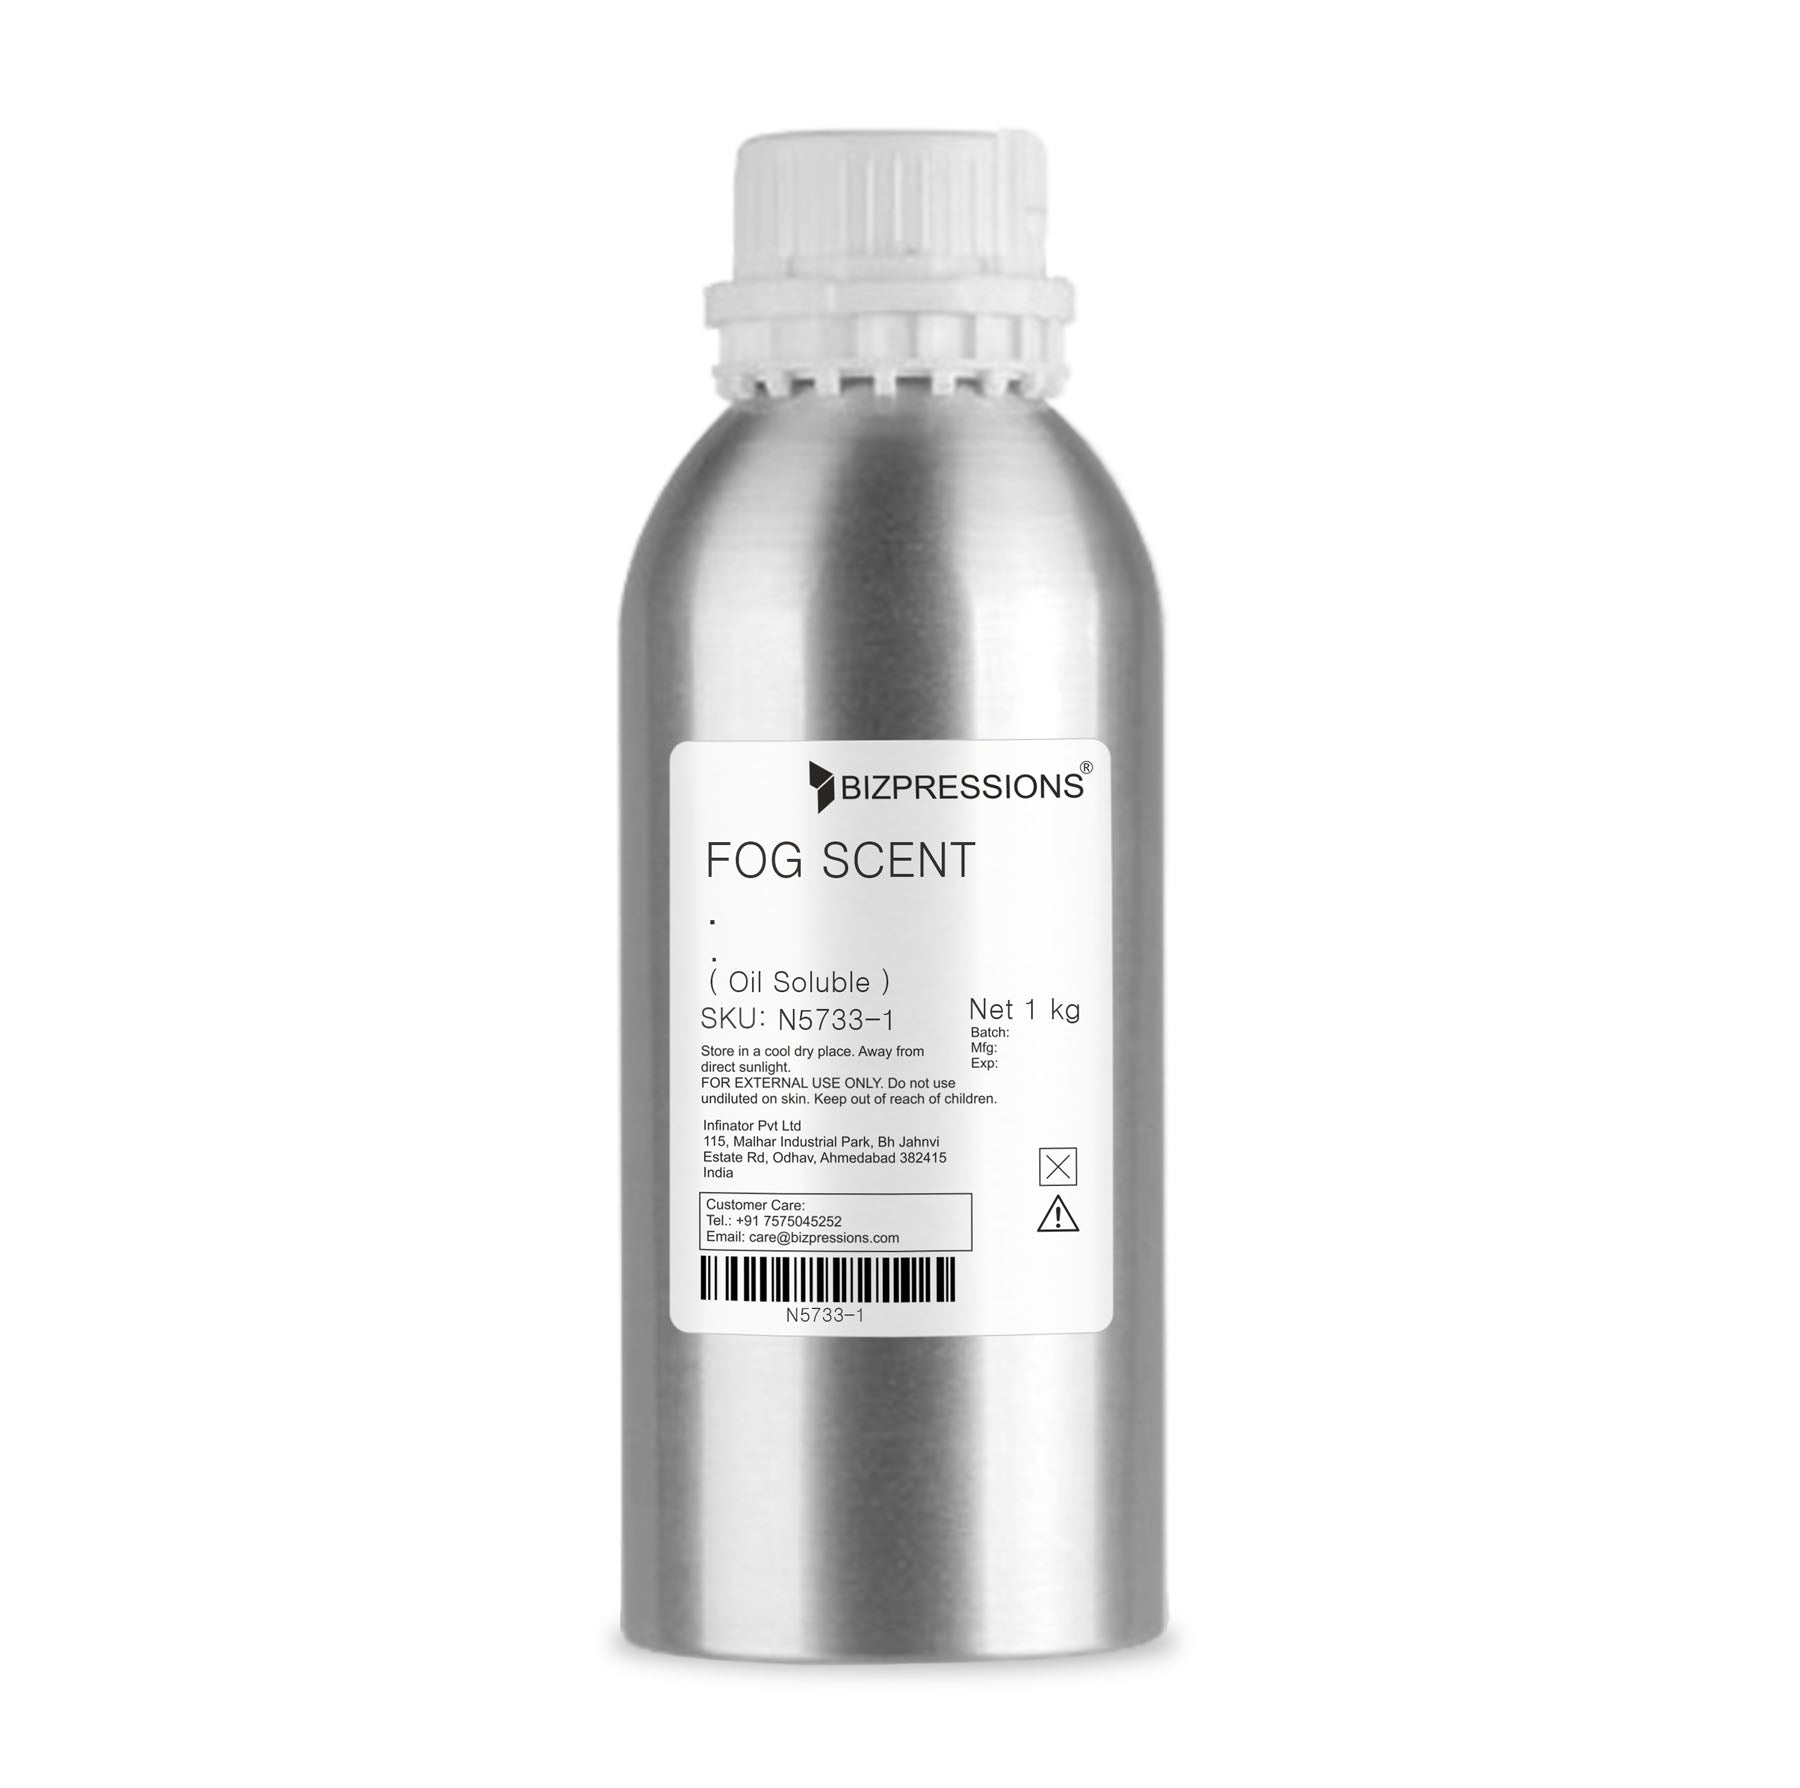 FOG SCENT - Fragrance ( Oil Soluble ) - 1 kg